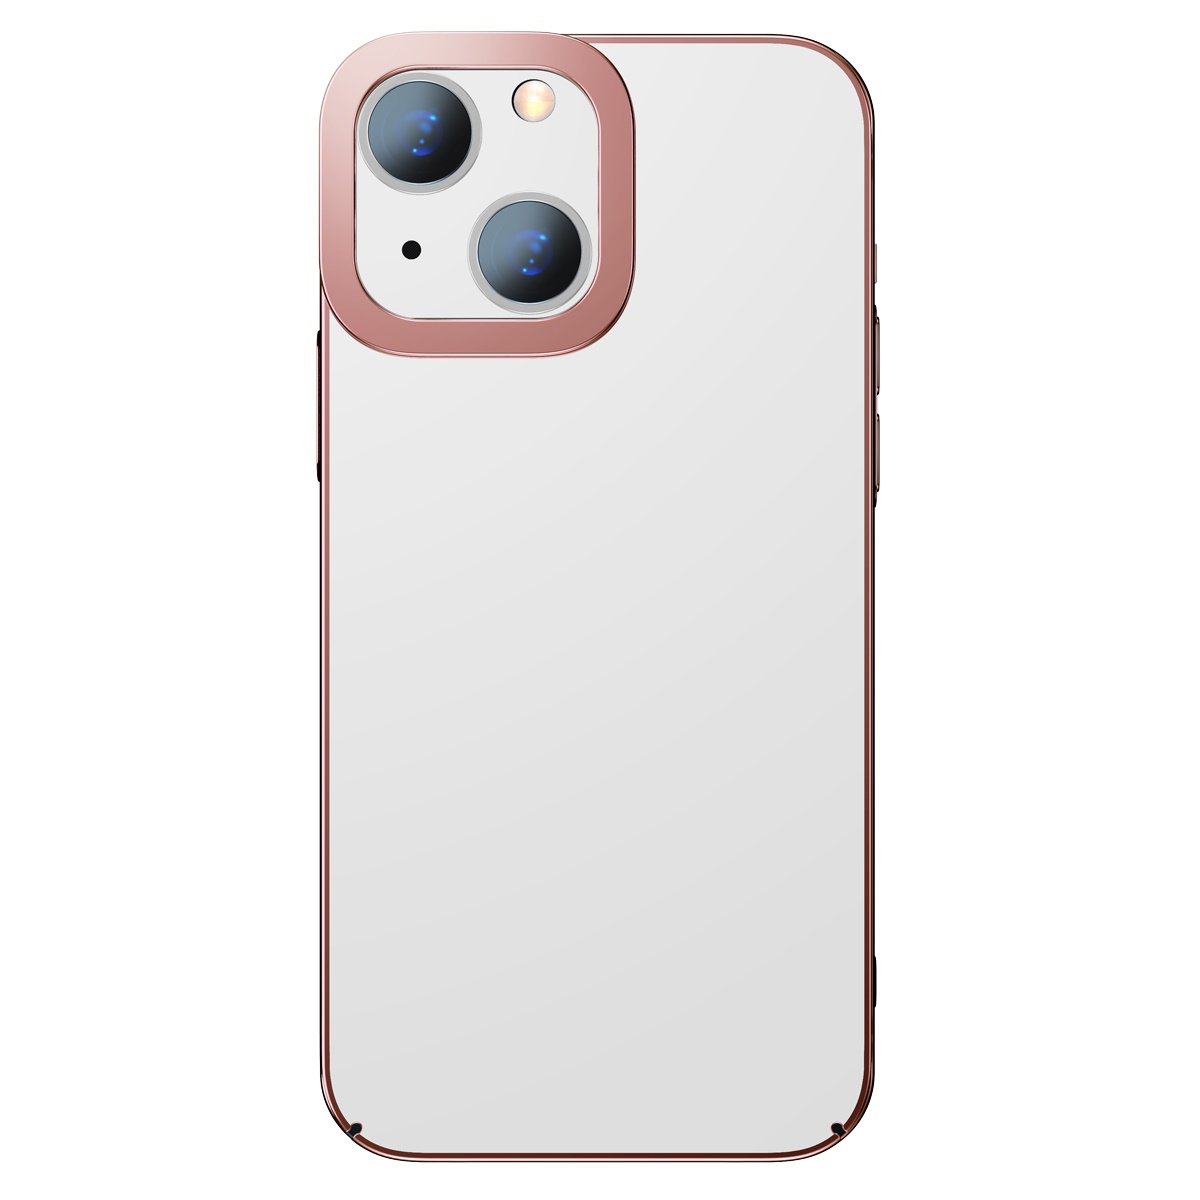 Baseus Glitter mobilskal till iPhone 13, transparent